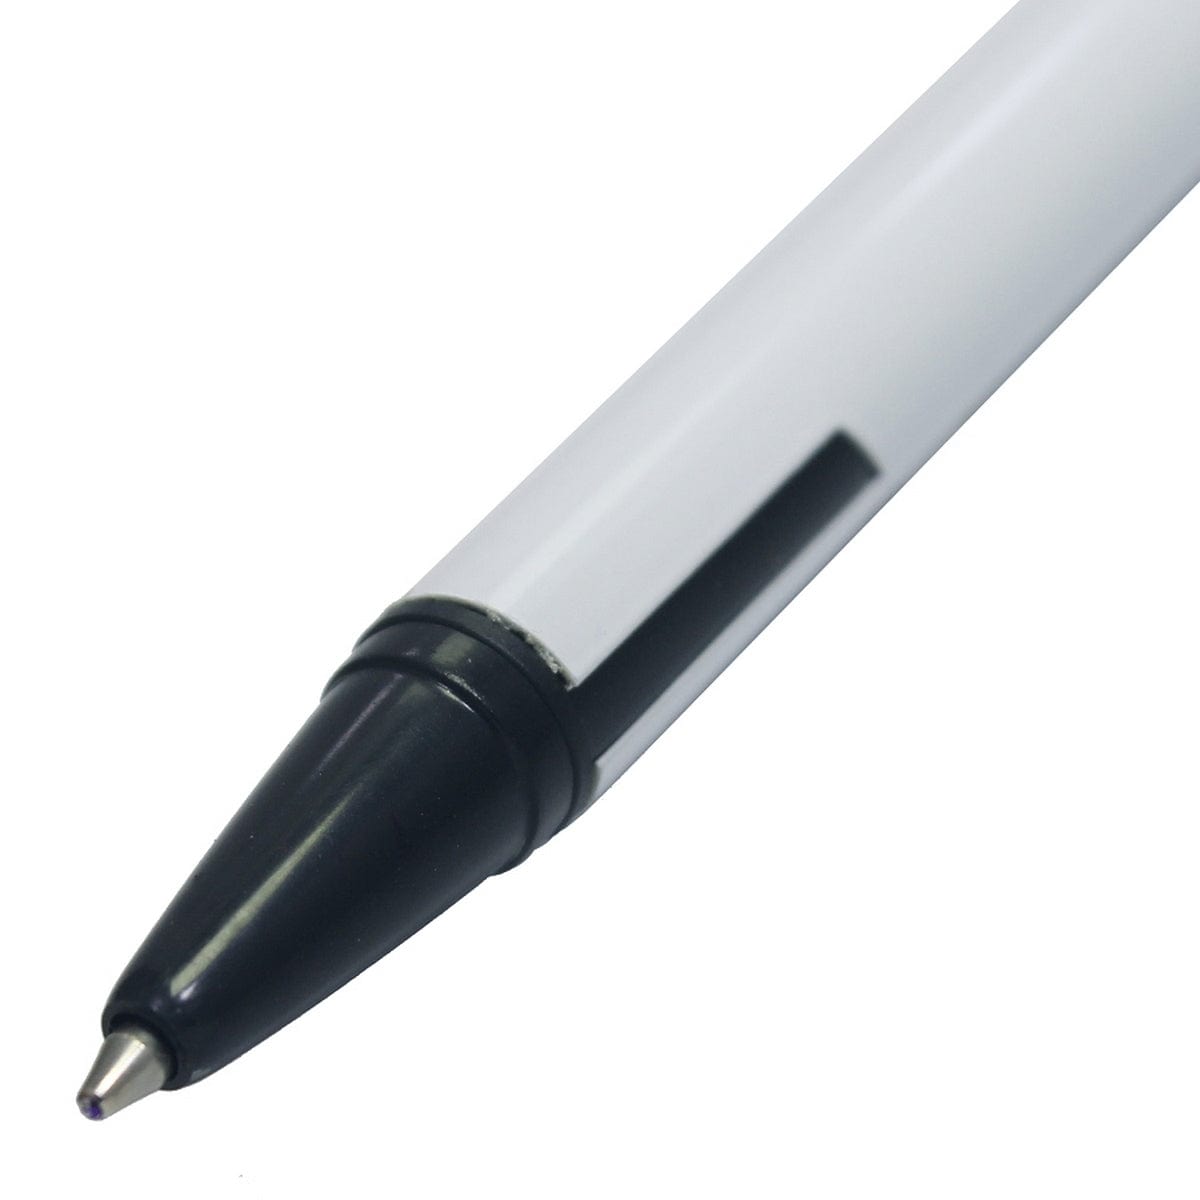 jags-mumbai Ball Pens GlideWrite Ballpoint Pen